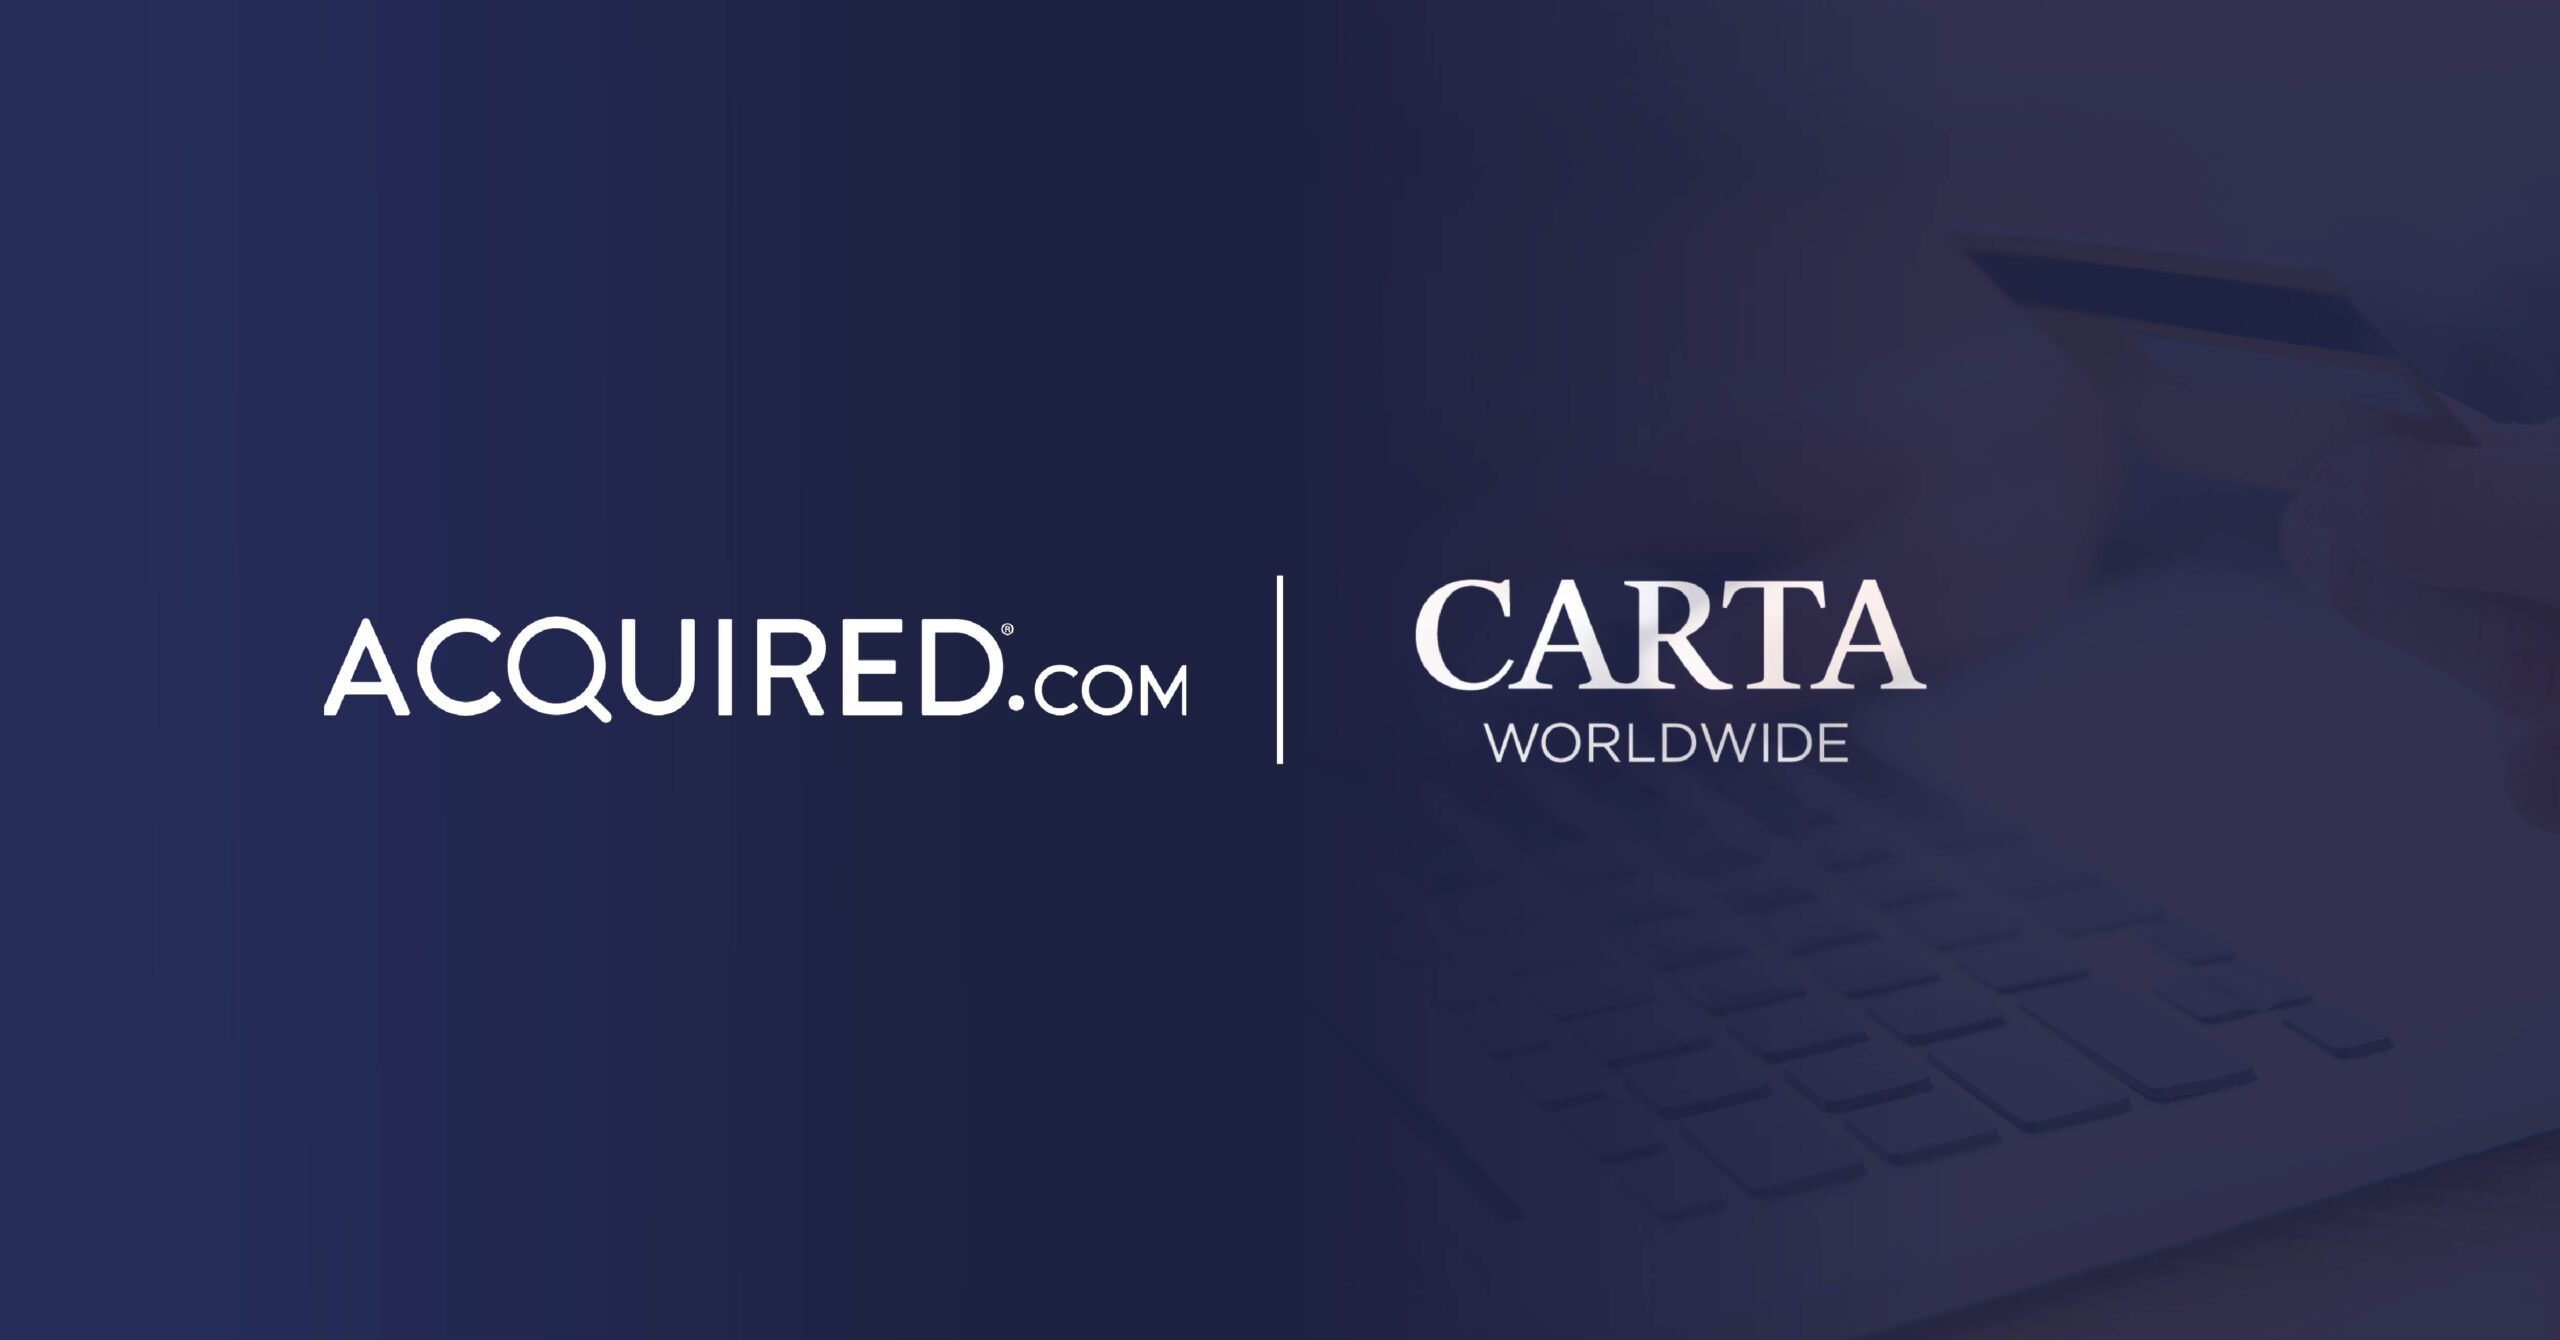 Carta Worldwide Acquired Partnership Launch